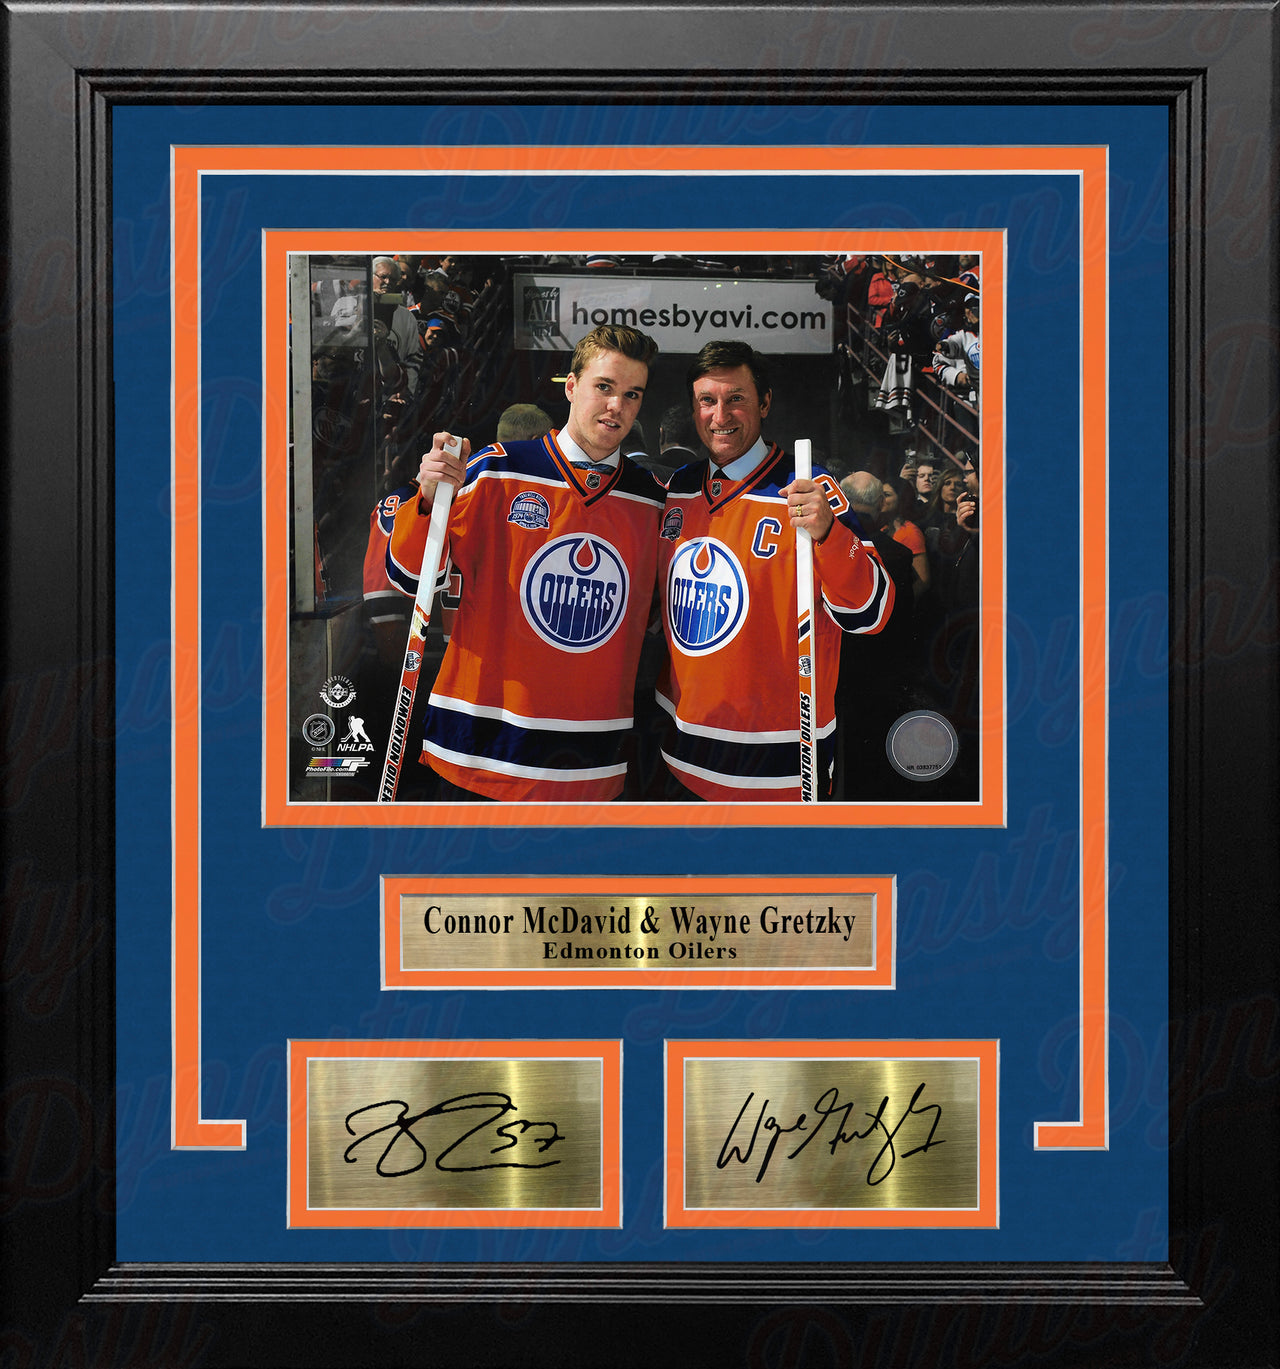 Connor McDavid & Wayne Gretzky Edmonton Oilers 8" x 10" Framed Hockey Photo with Engraved Autographs - Dynasty Sports & Framing 